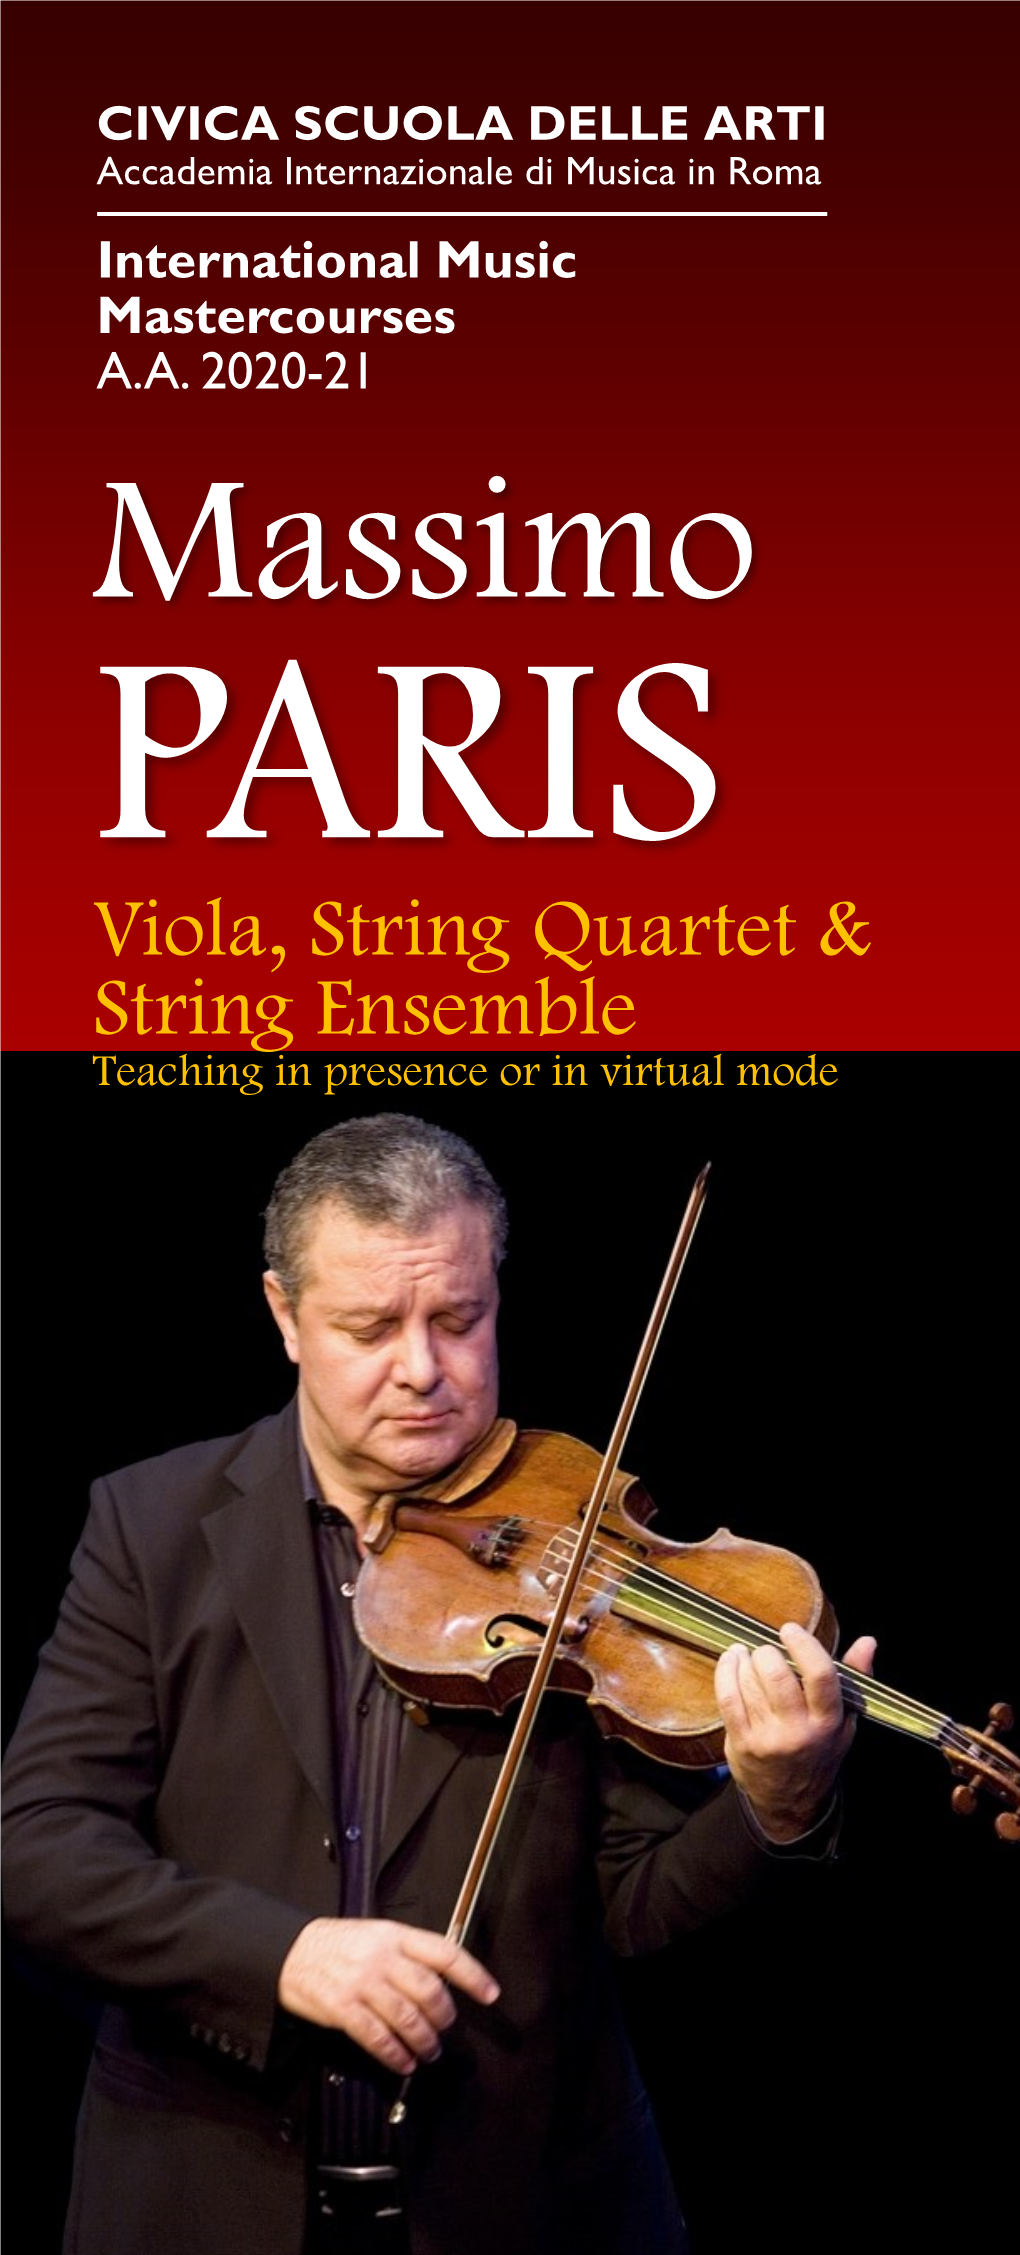 Massimo PARIS Viola, String Quartet & String Ensemble Teaching in Presence Or in Virtual Mode ASSIMO PARIS Was Born in Rome, Italy